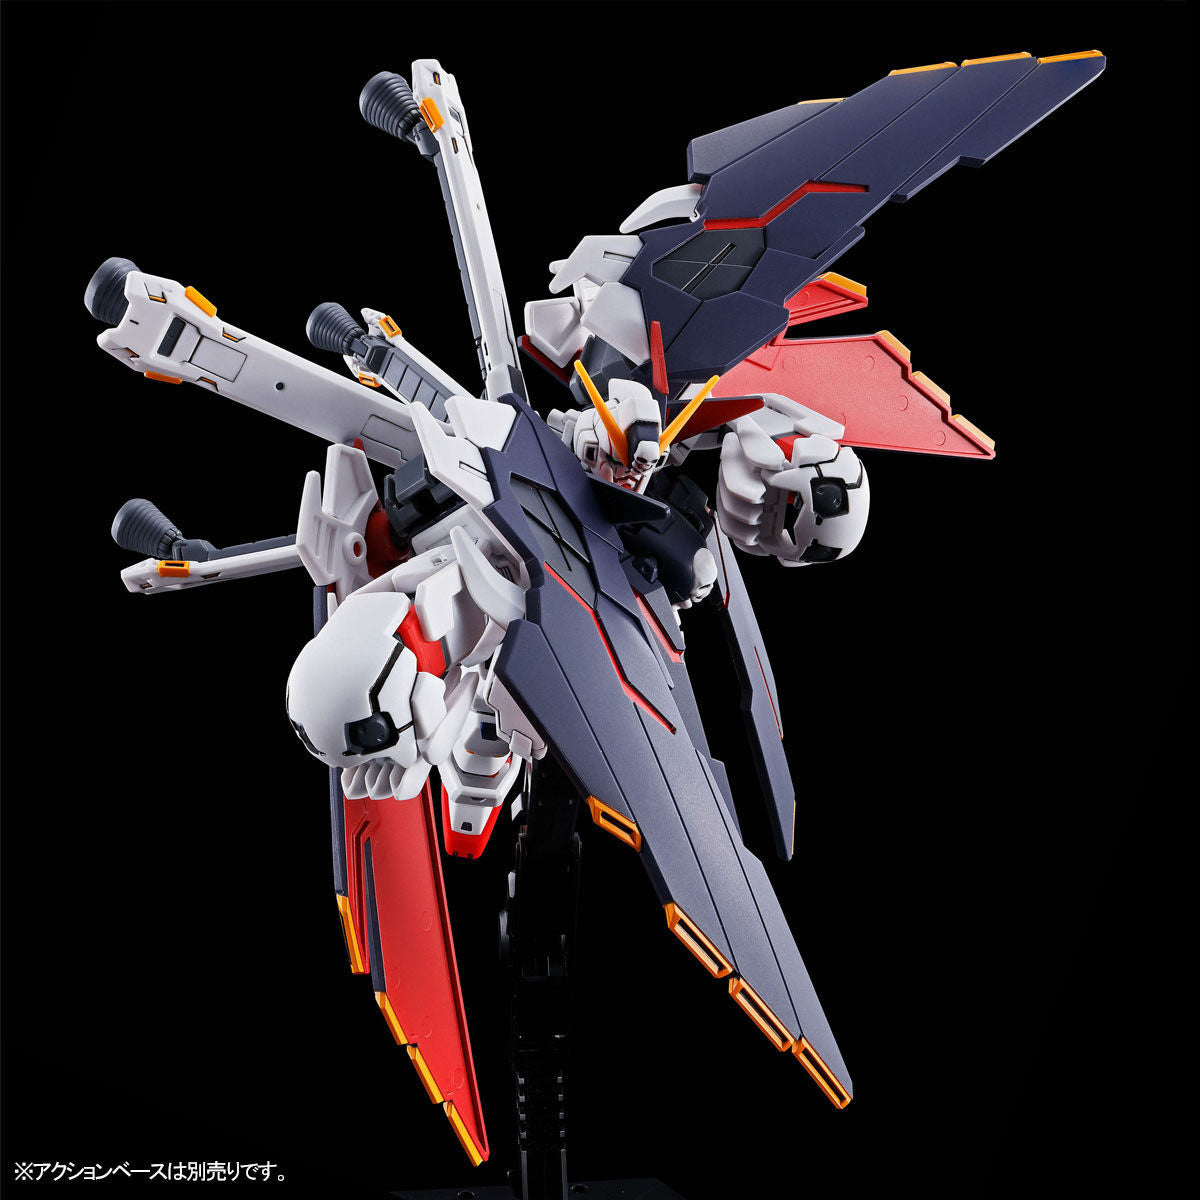 HGUC - XM-X1 Crossbone Gundam X-1 Full Cloth